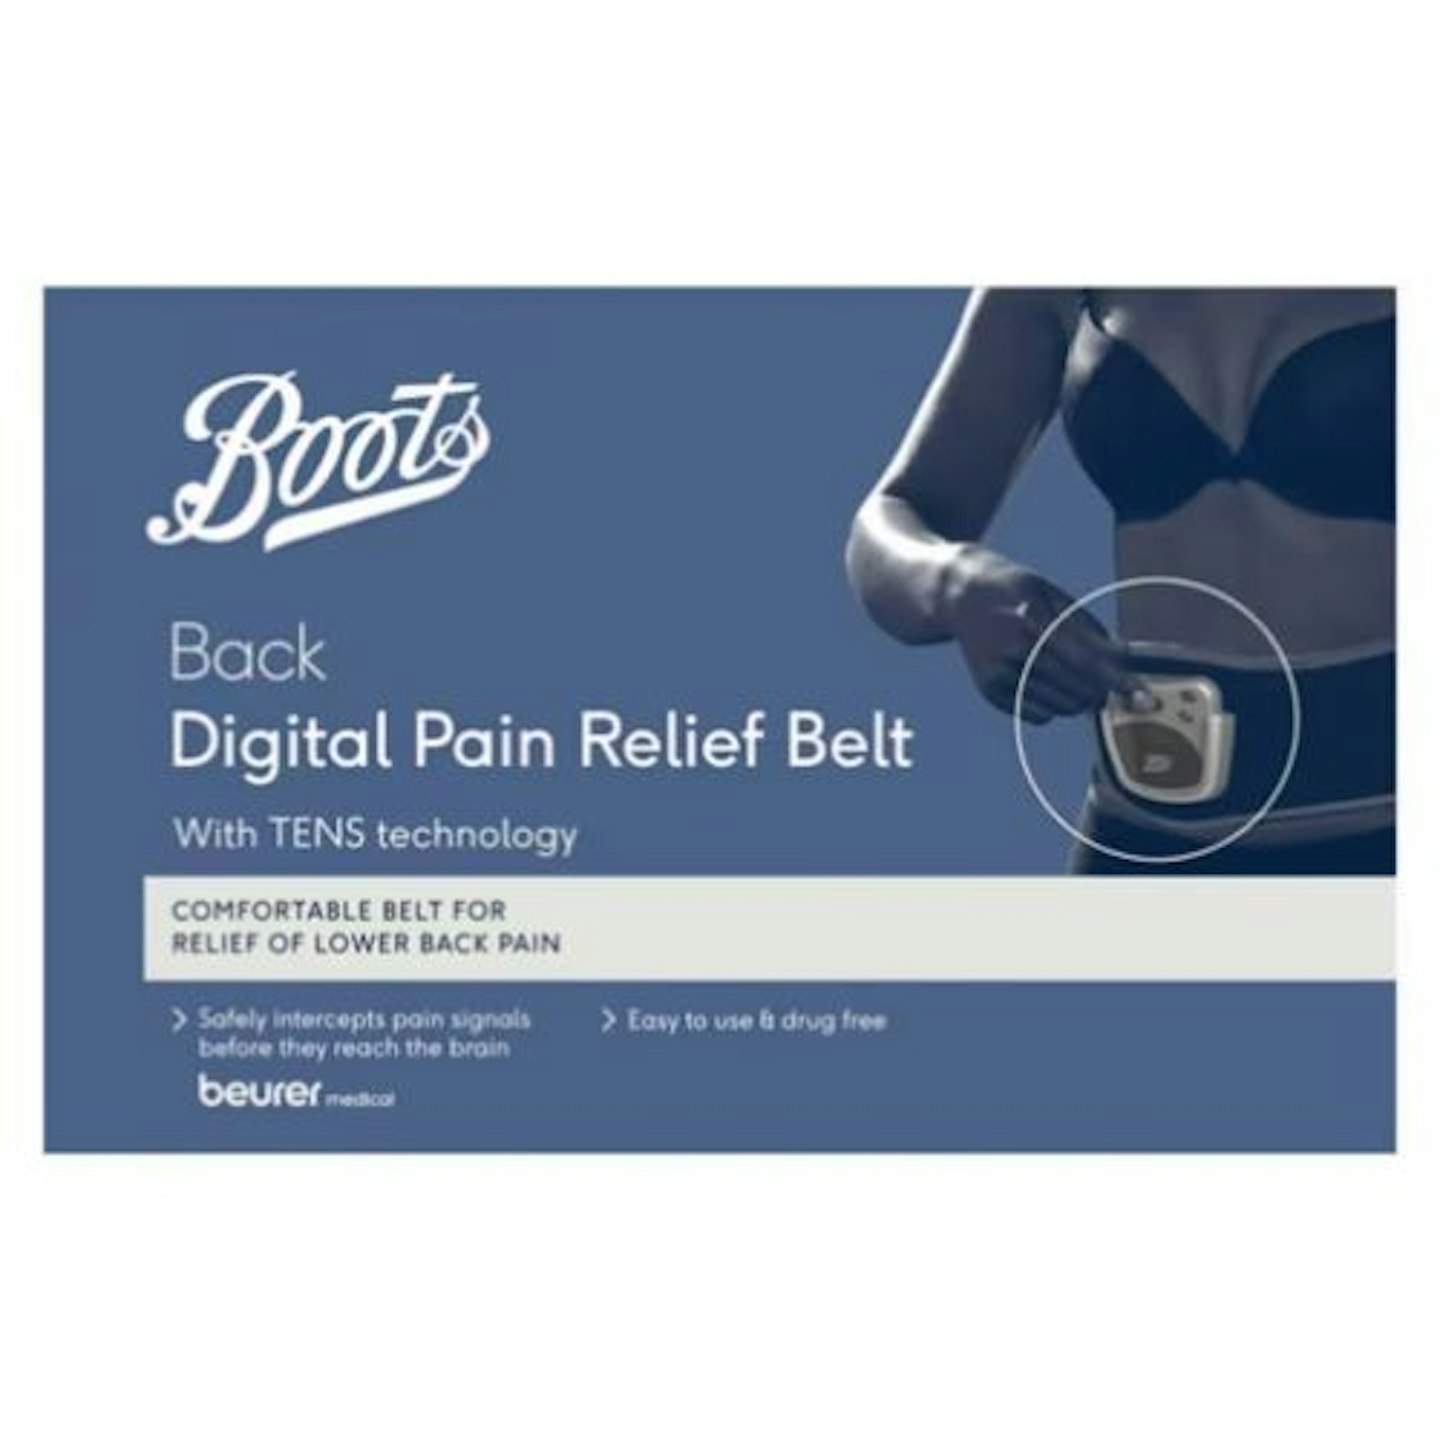 Boots TENS Back Pain Belt